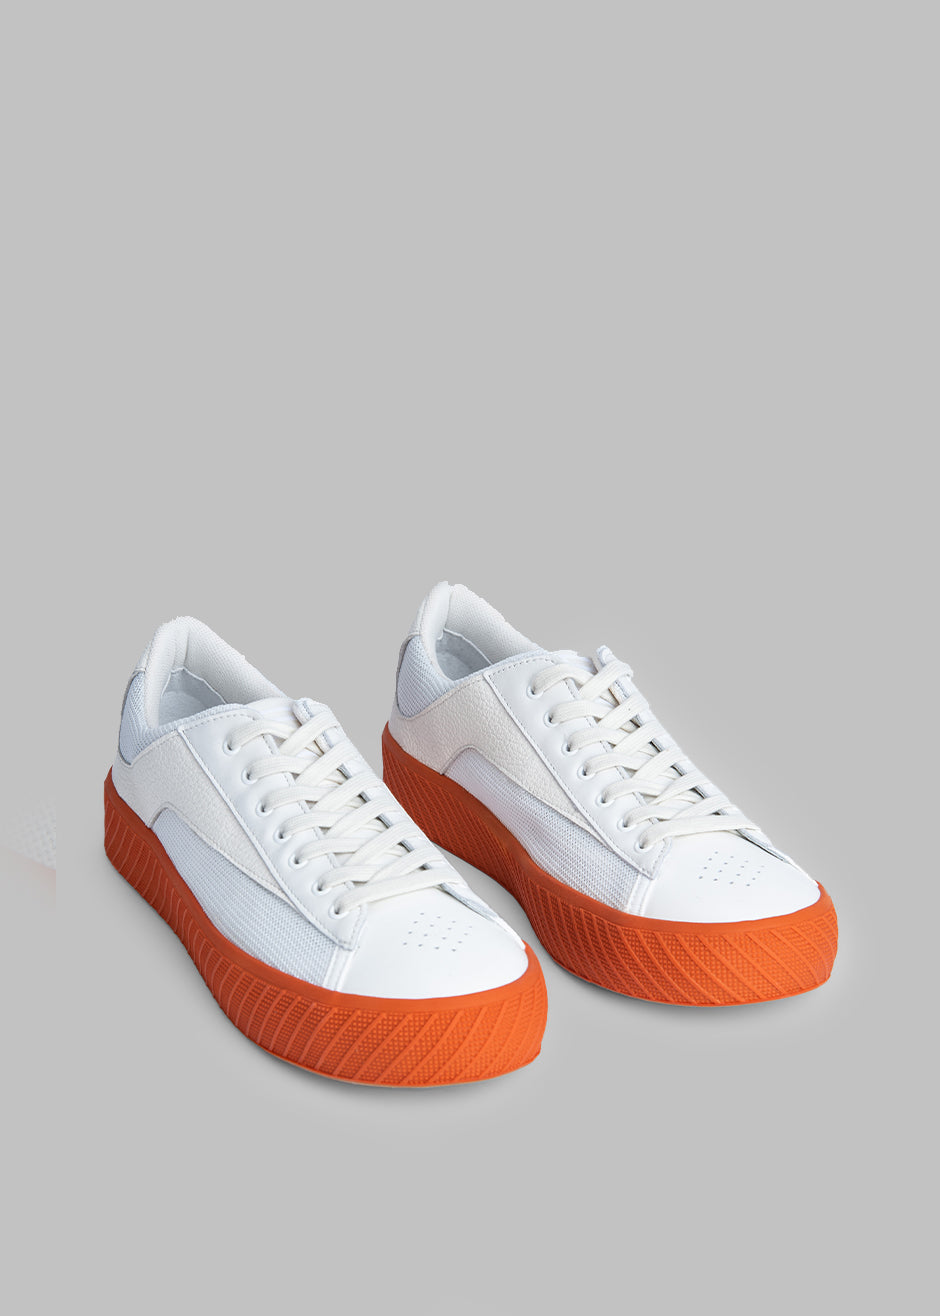 BY FAR Rodina Sneakers - Tangerine On White - 6